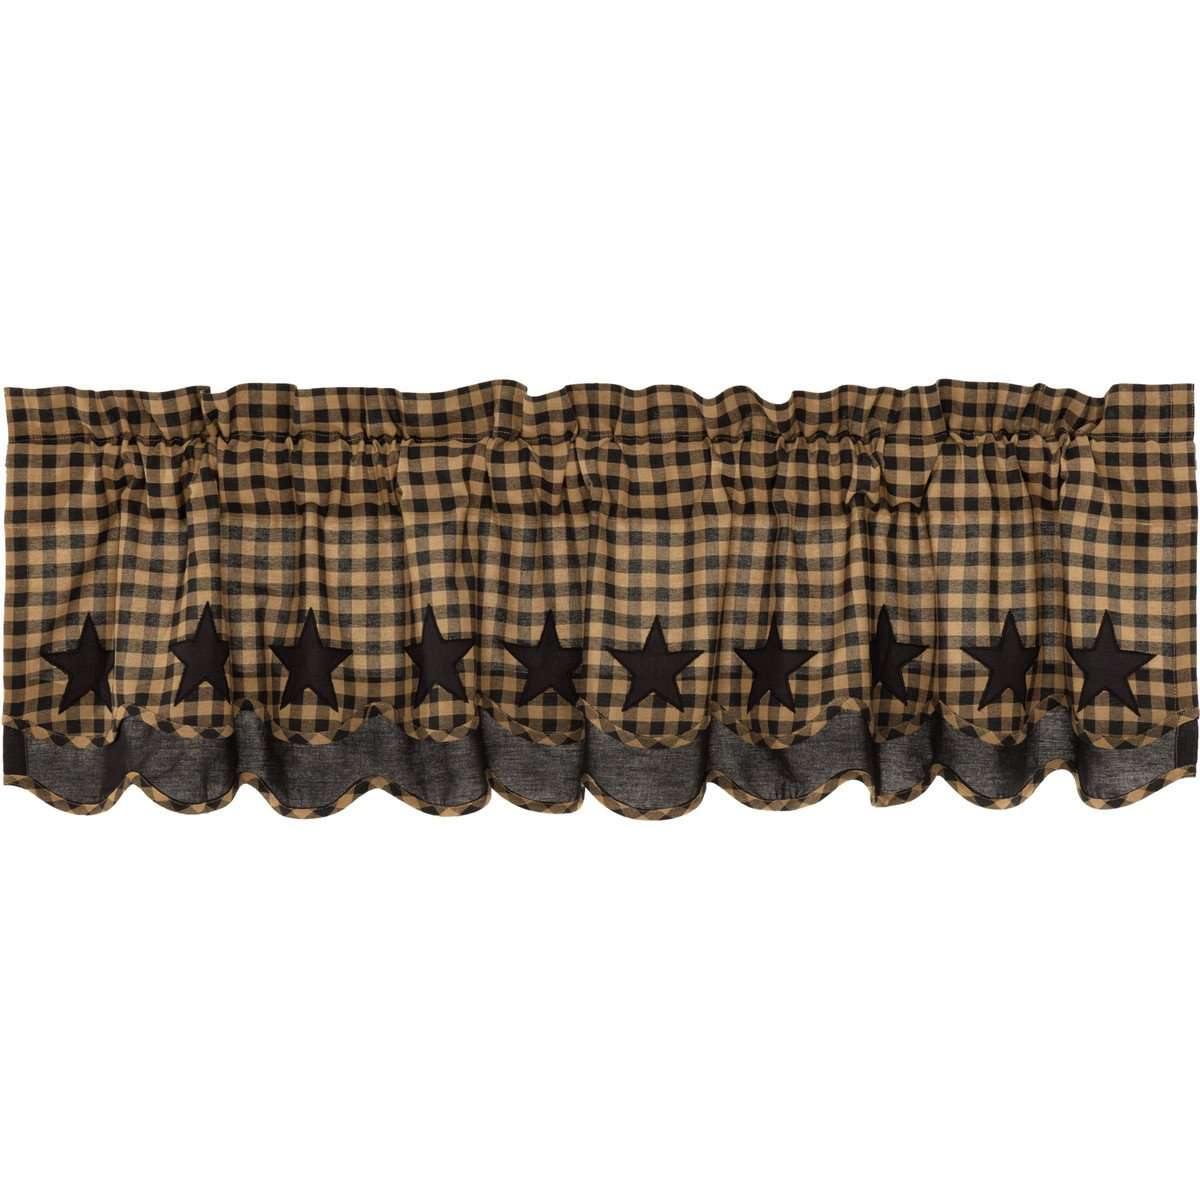 Black Star Scalloped Layered Valance Curtain 16x60 VHC Brands - The Fox Decor